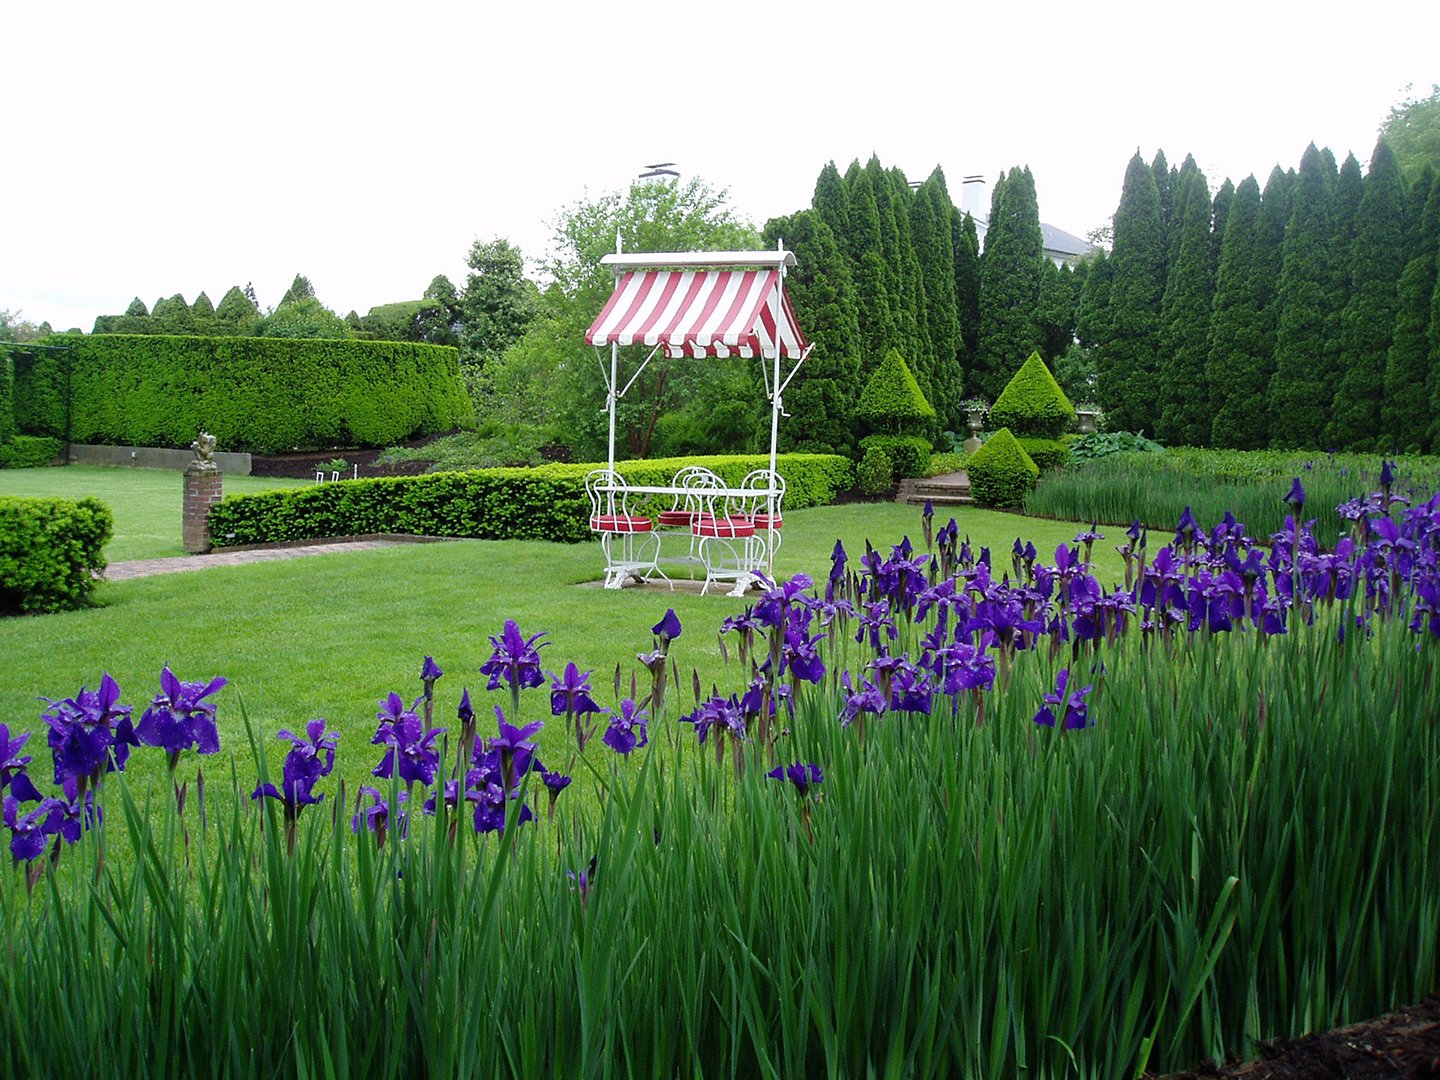 Ladew Topiary Gardens in Maryland - The Croquet Court Garden